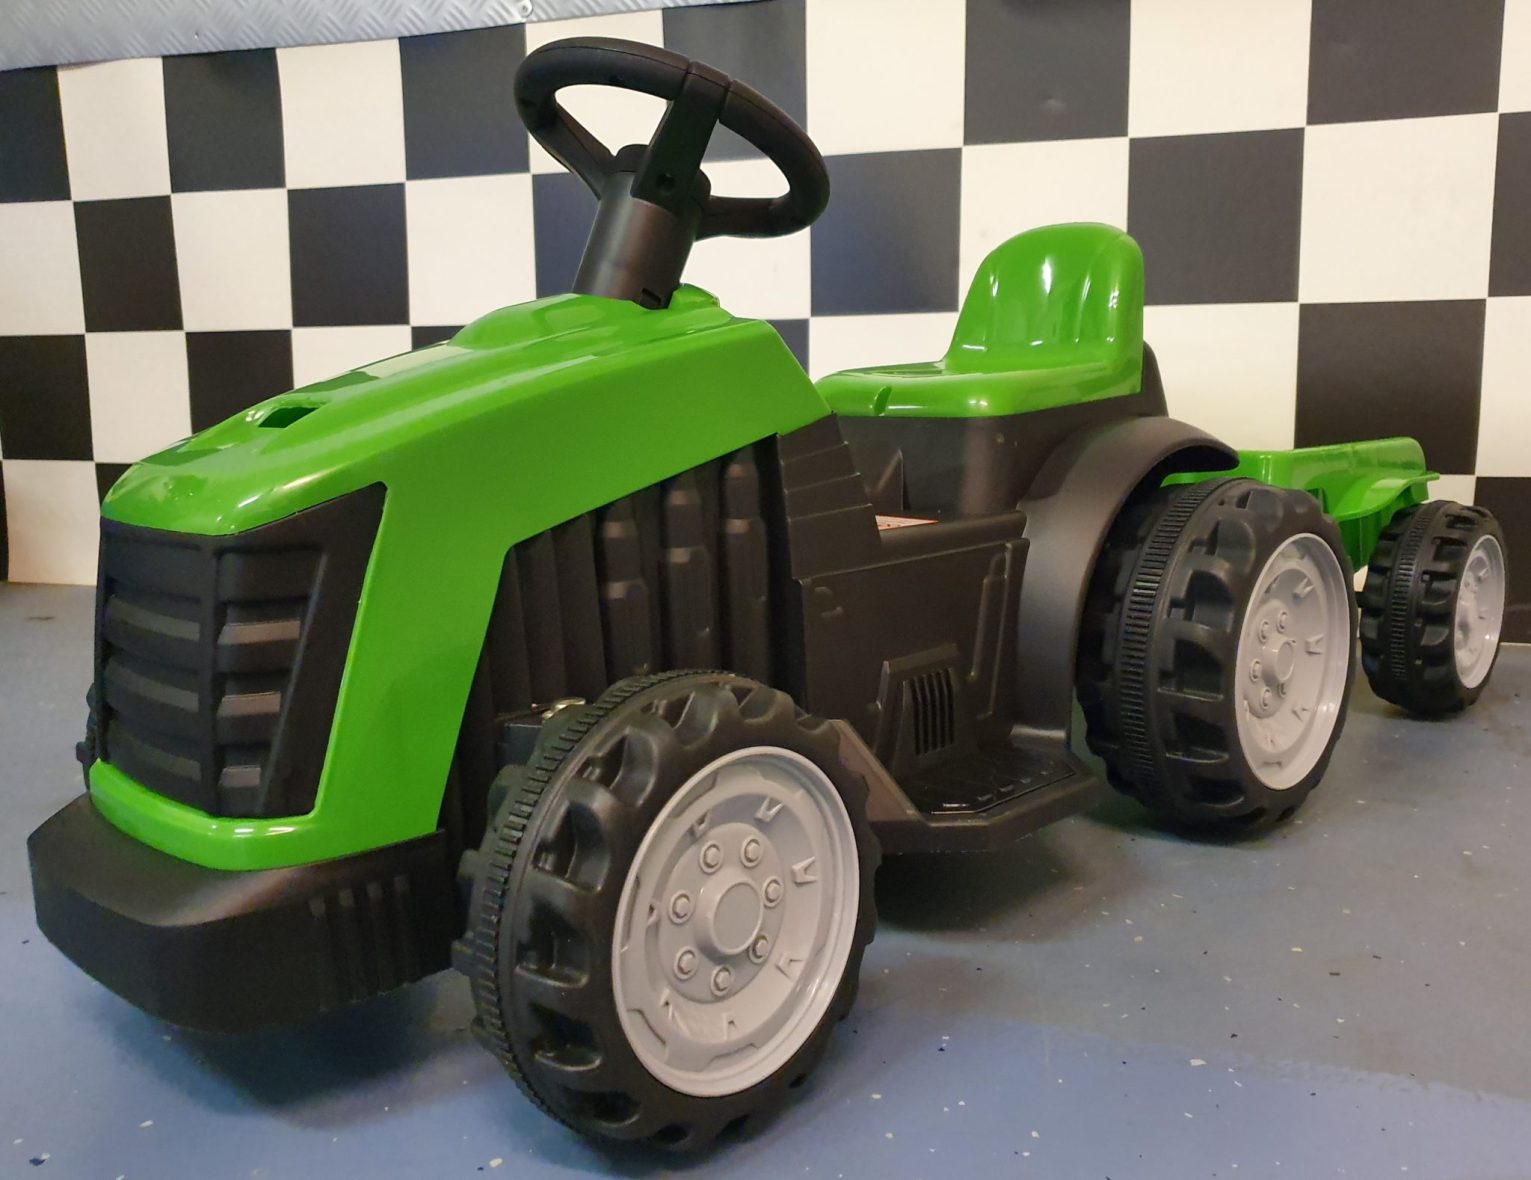 Kinder-tractor-6volt